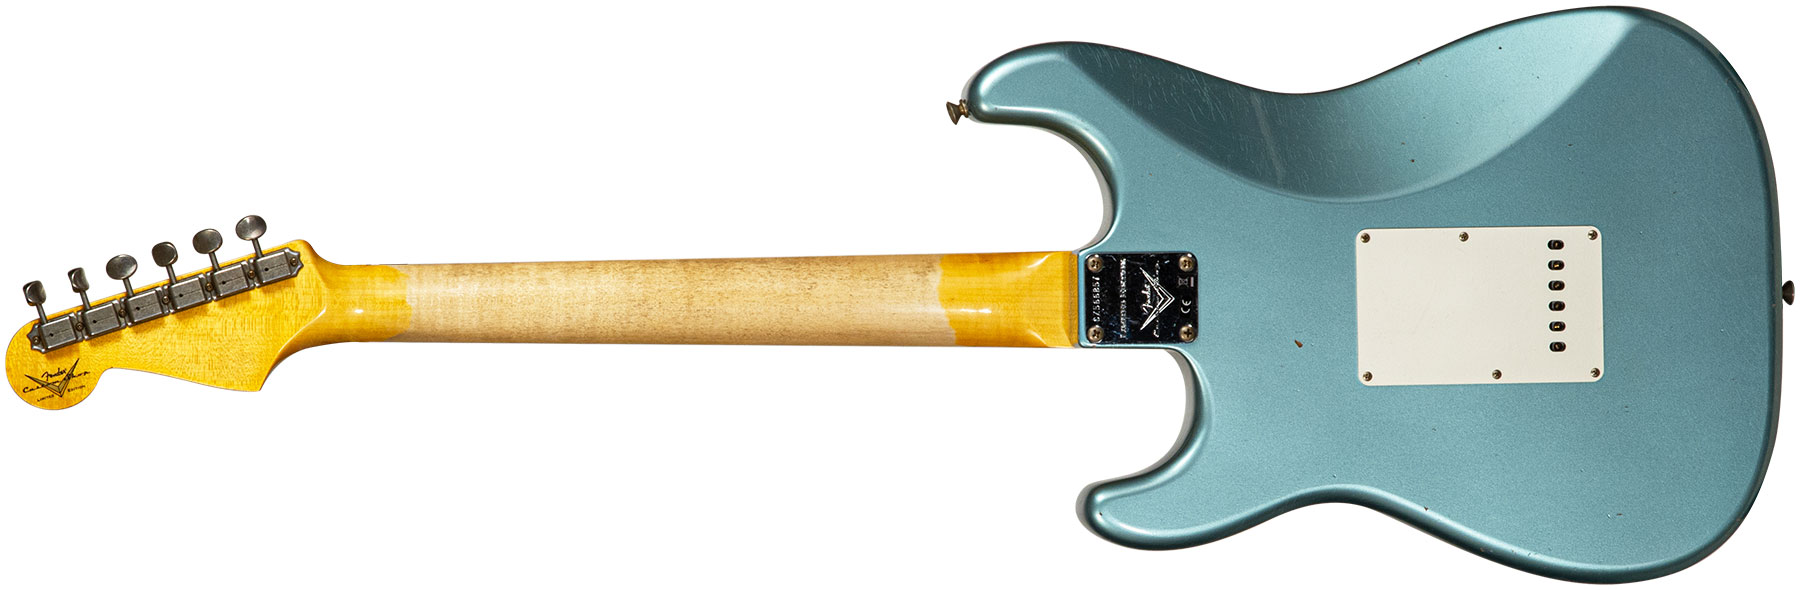 Fender Custom Shop Strat 1959 3s Trem Rw #cz566857 - Journeyman Relic Teal Green Metallic - Guitare Électrique Forme Str - Variation 1